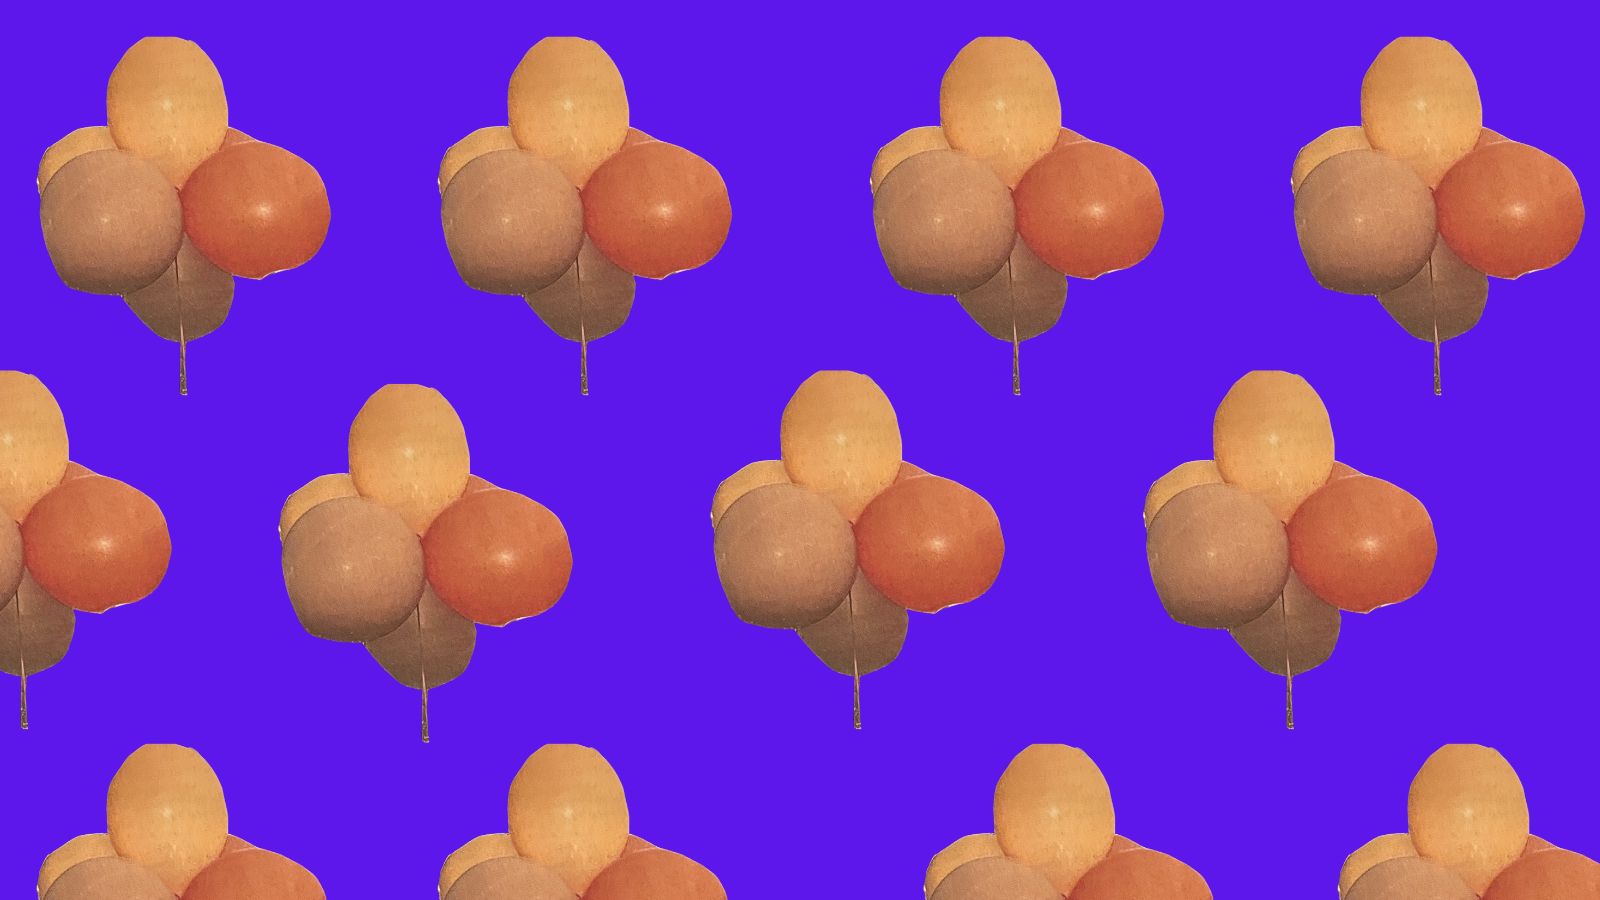 An illustration of orange balloons against a dark blue background.